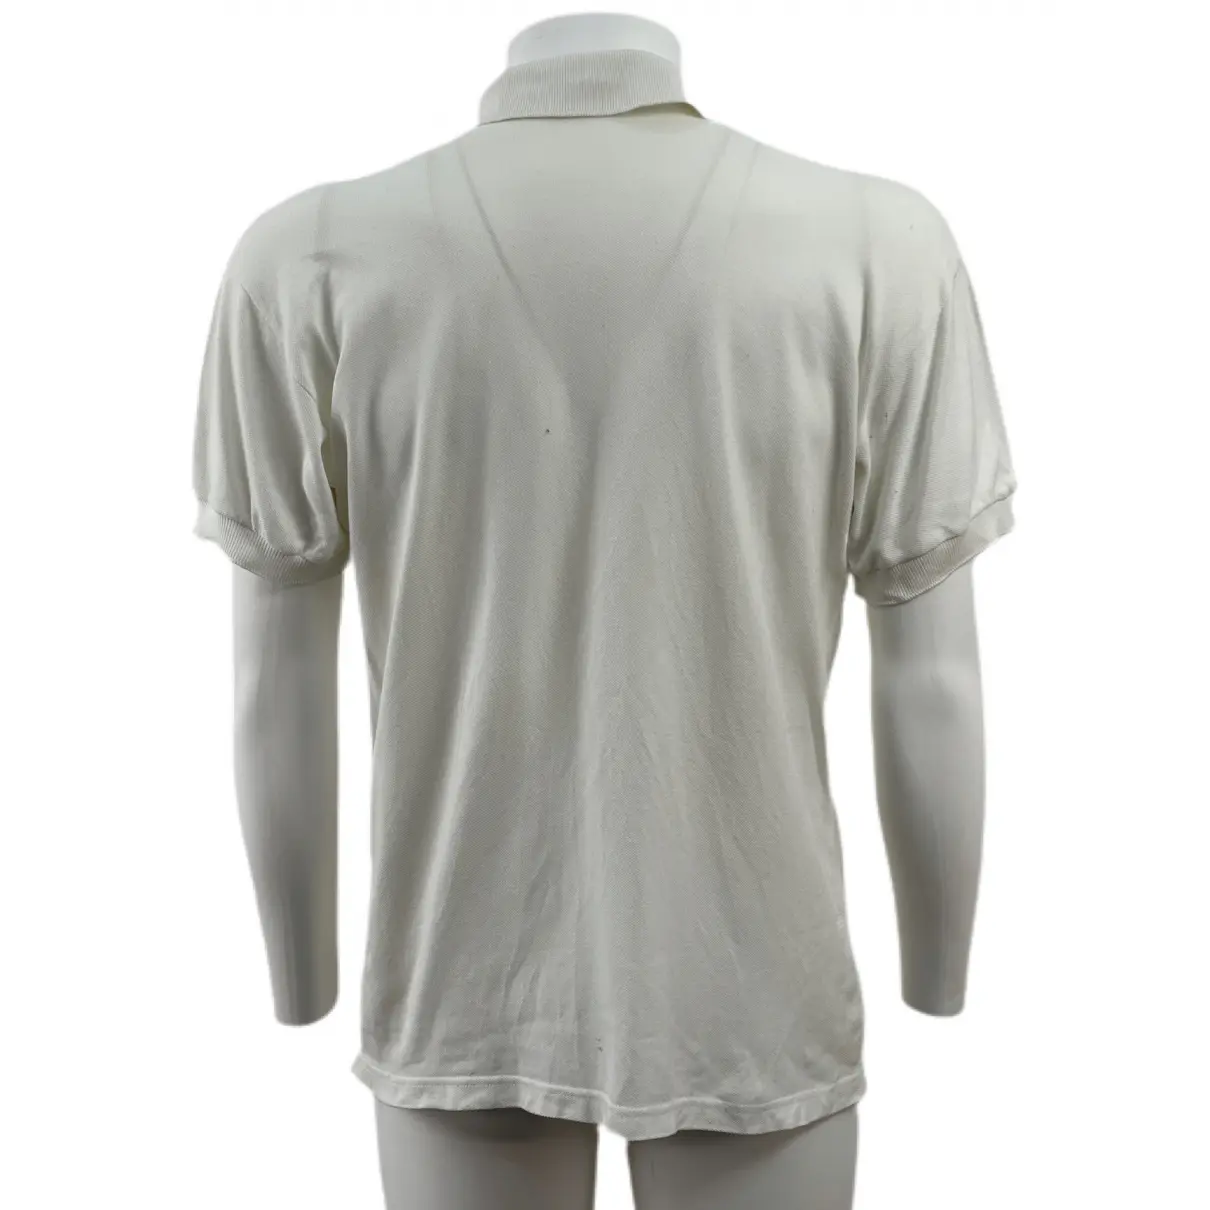 Buy Fendi Polo shirt online - Vintage